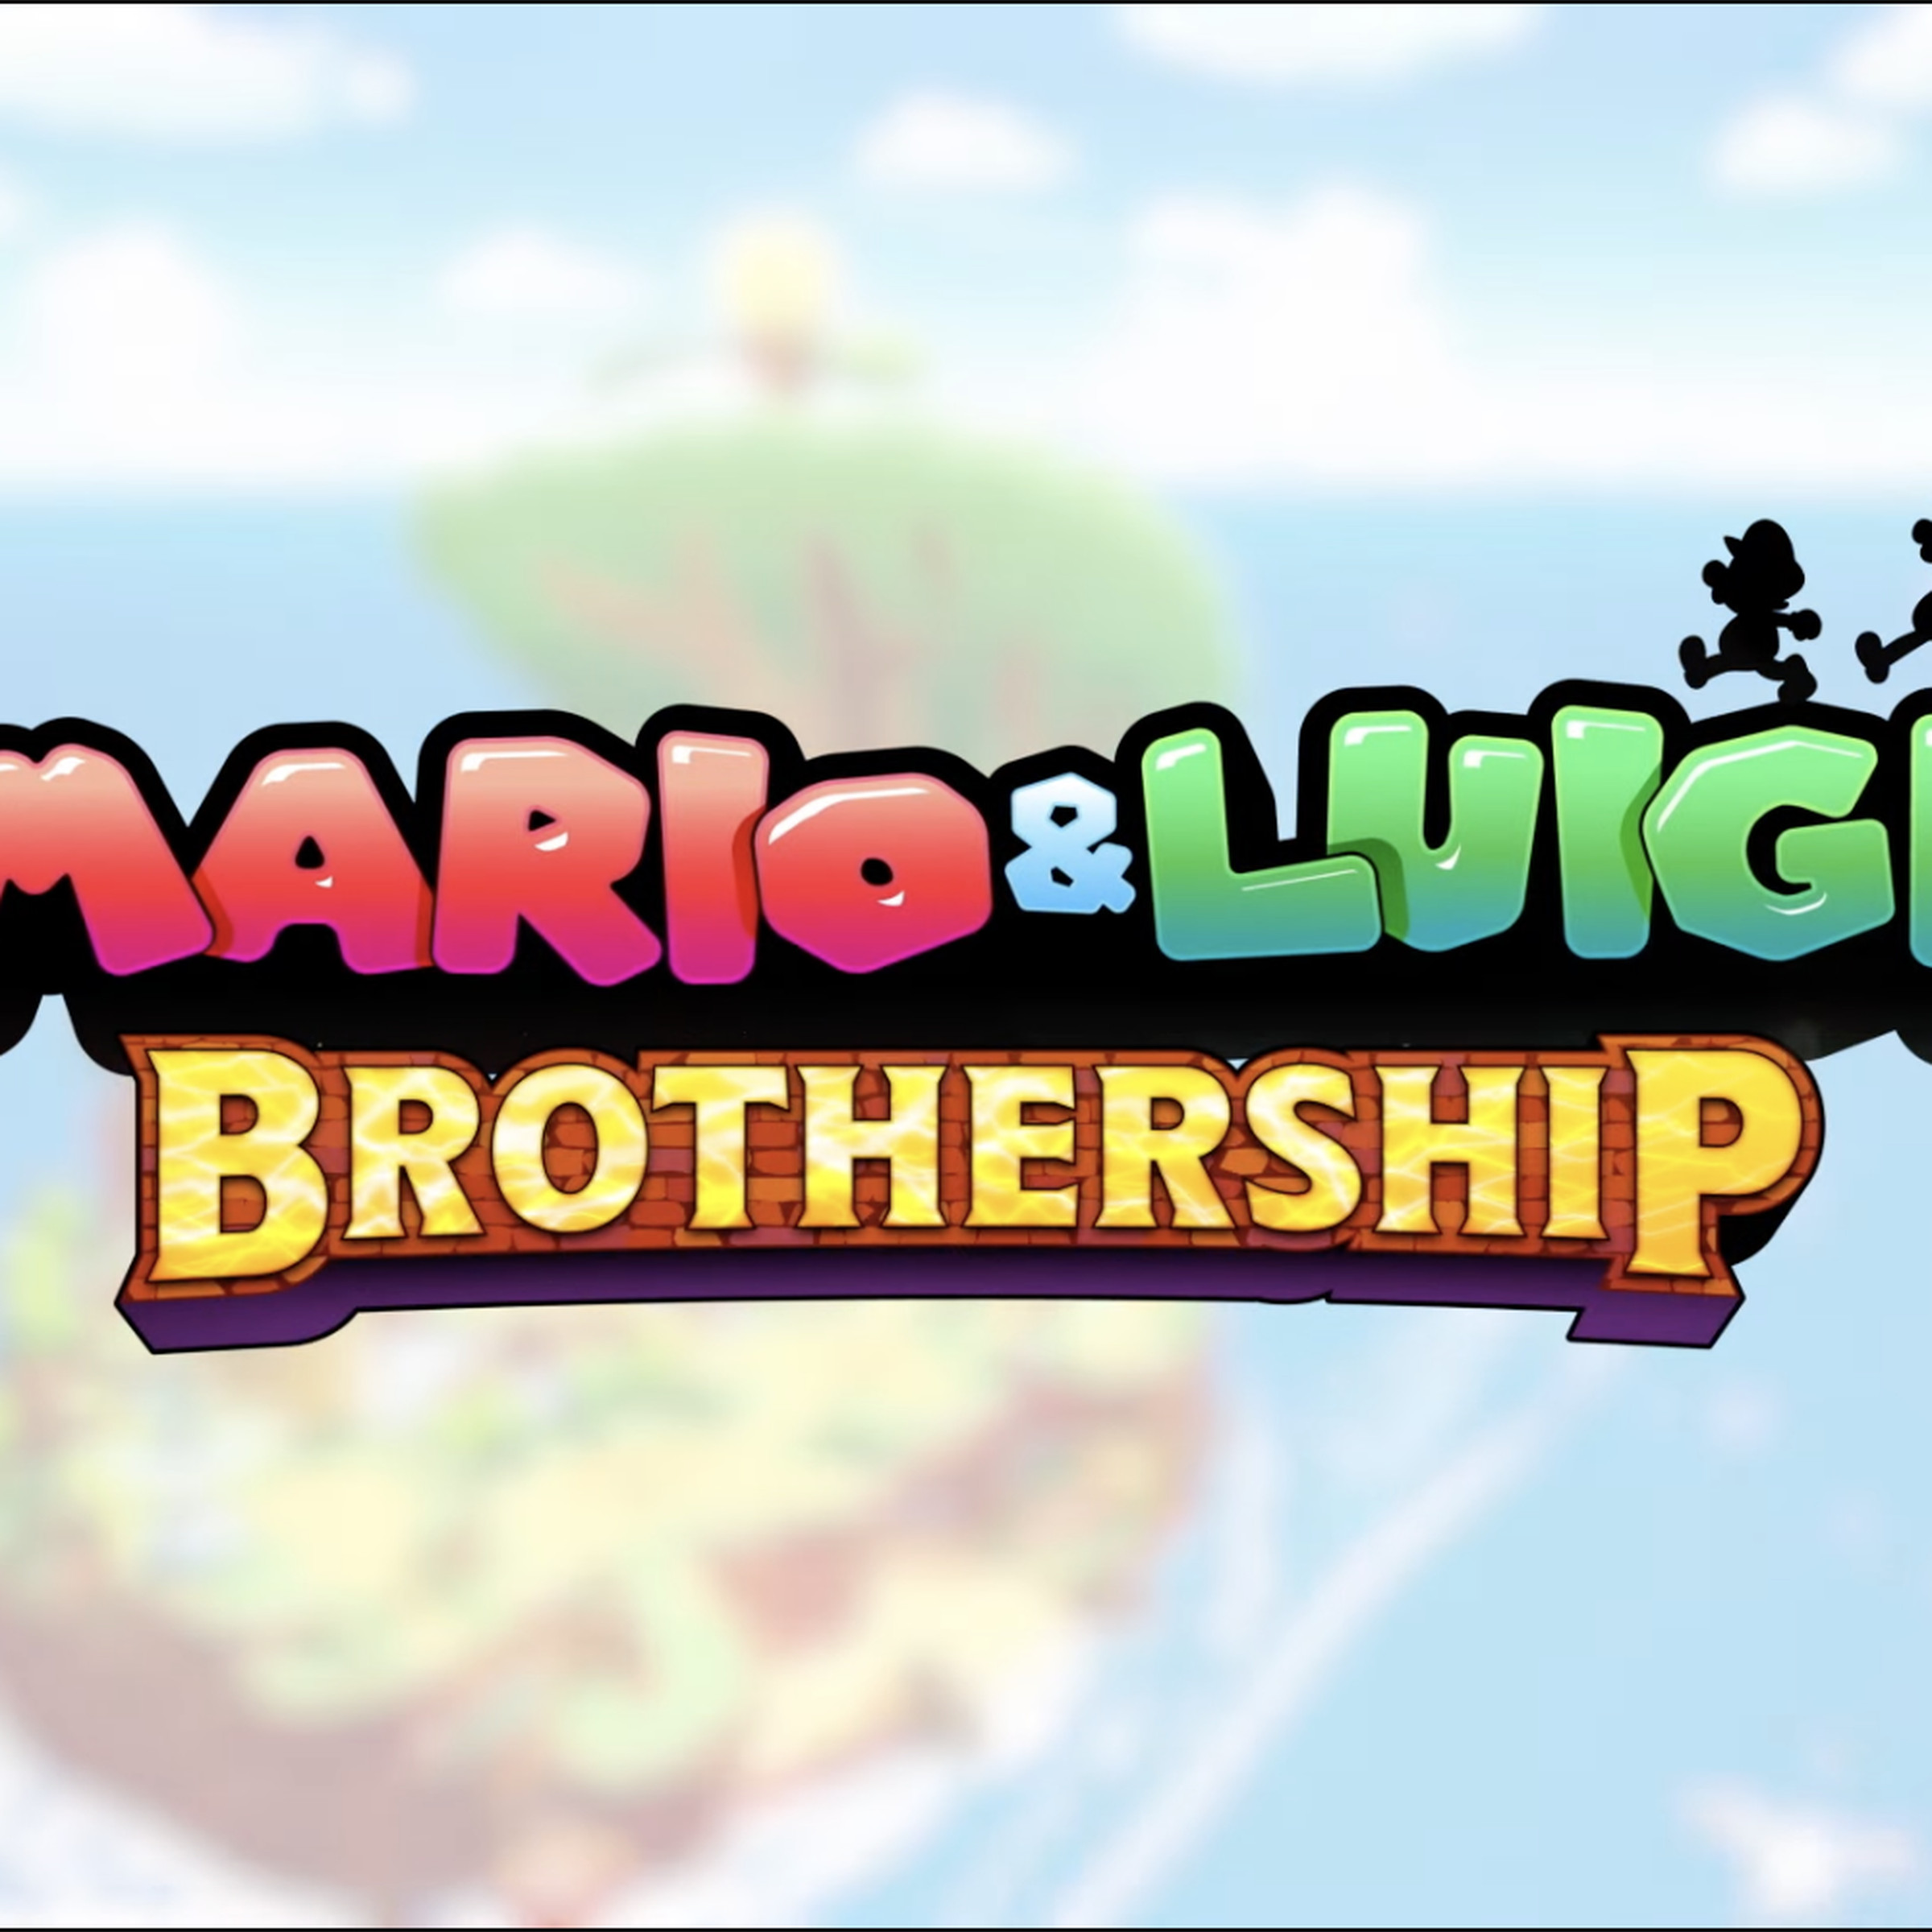 Screenshot from Mario &amp; Luigi Brothership